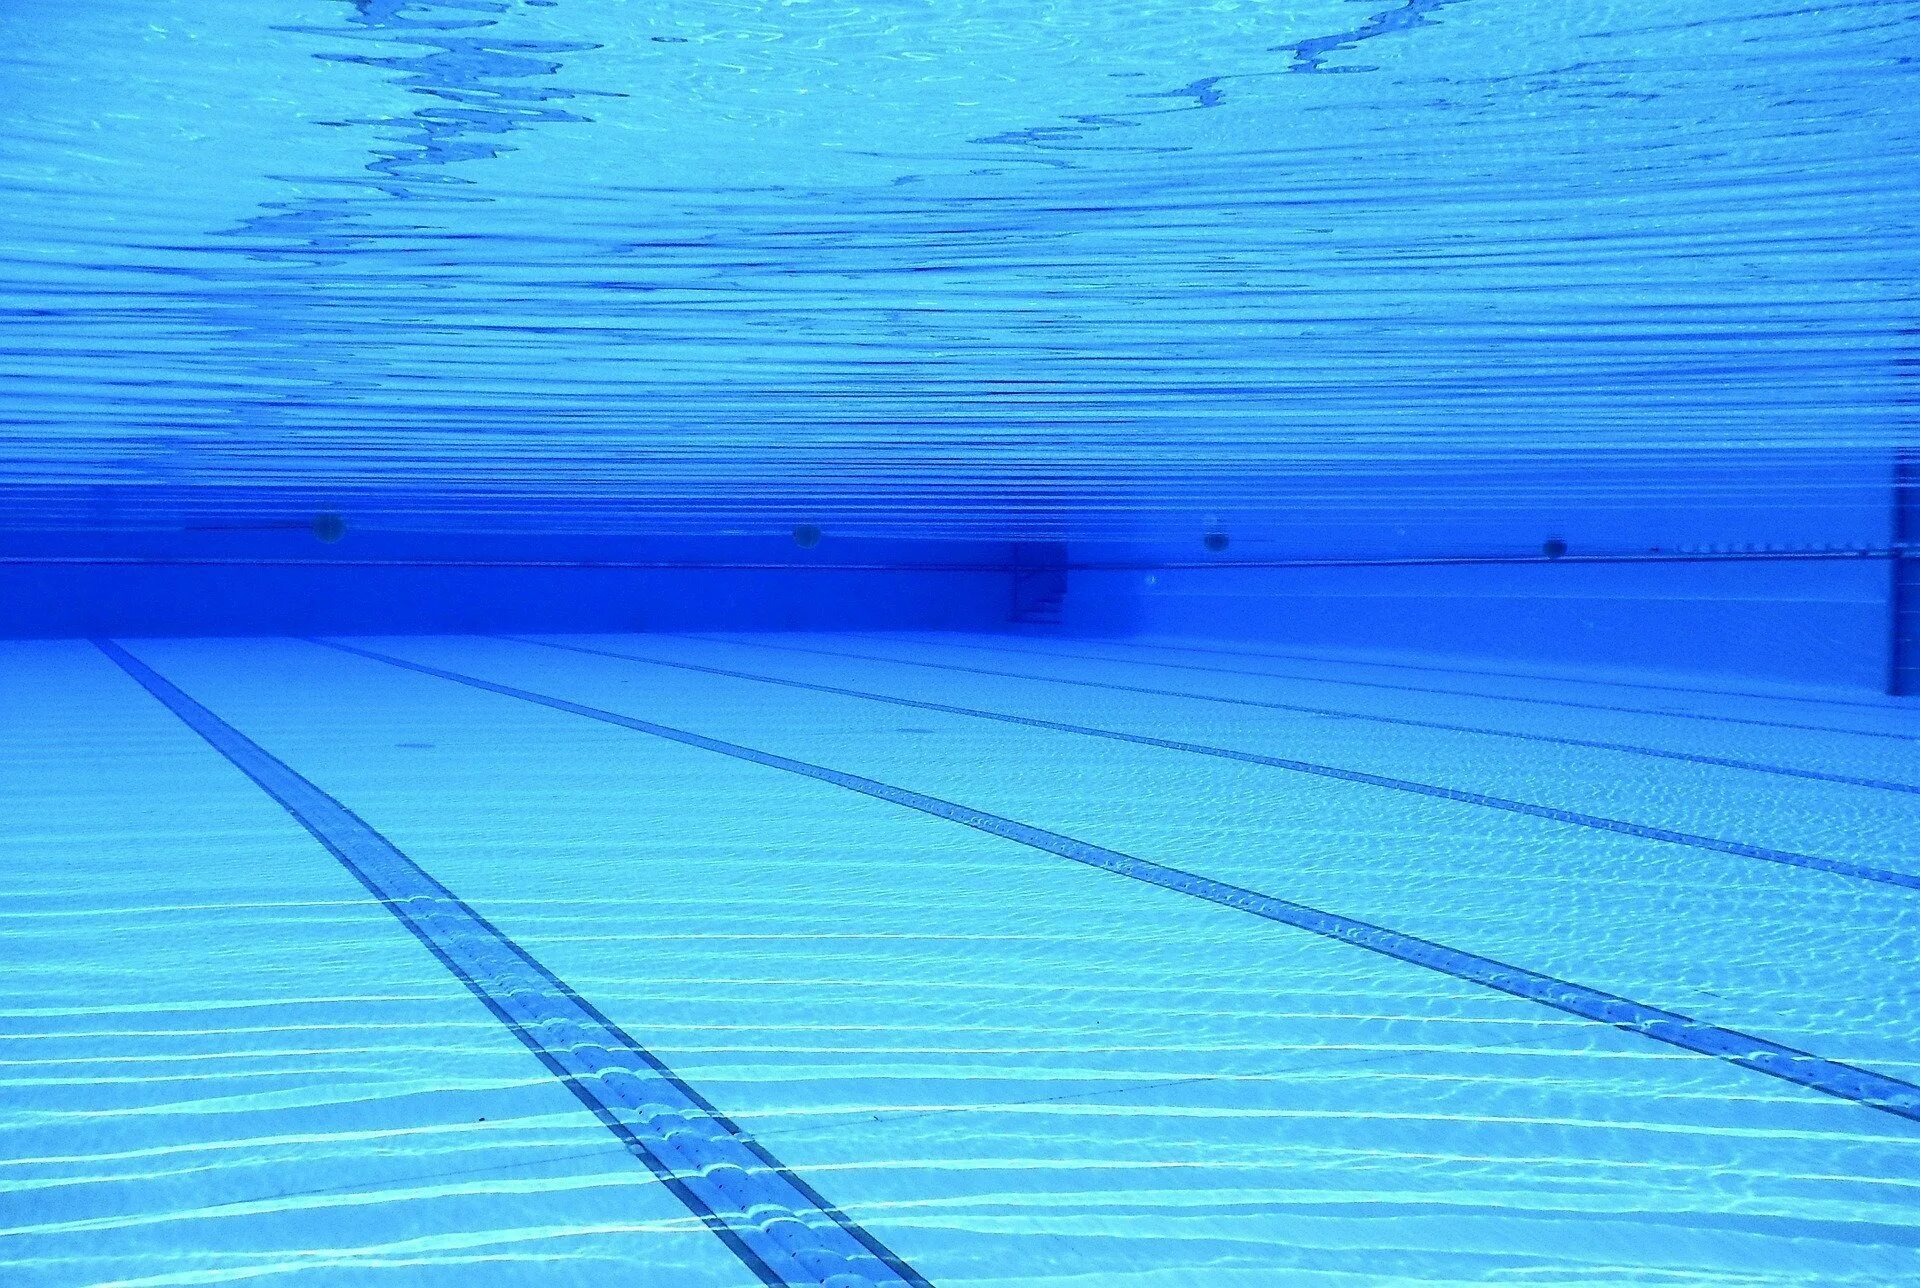 Сток бассейна озер. Бассейн. Спортивный бассейн. Красивый спортивный бассейн. Голубой бассейн.